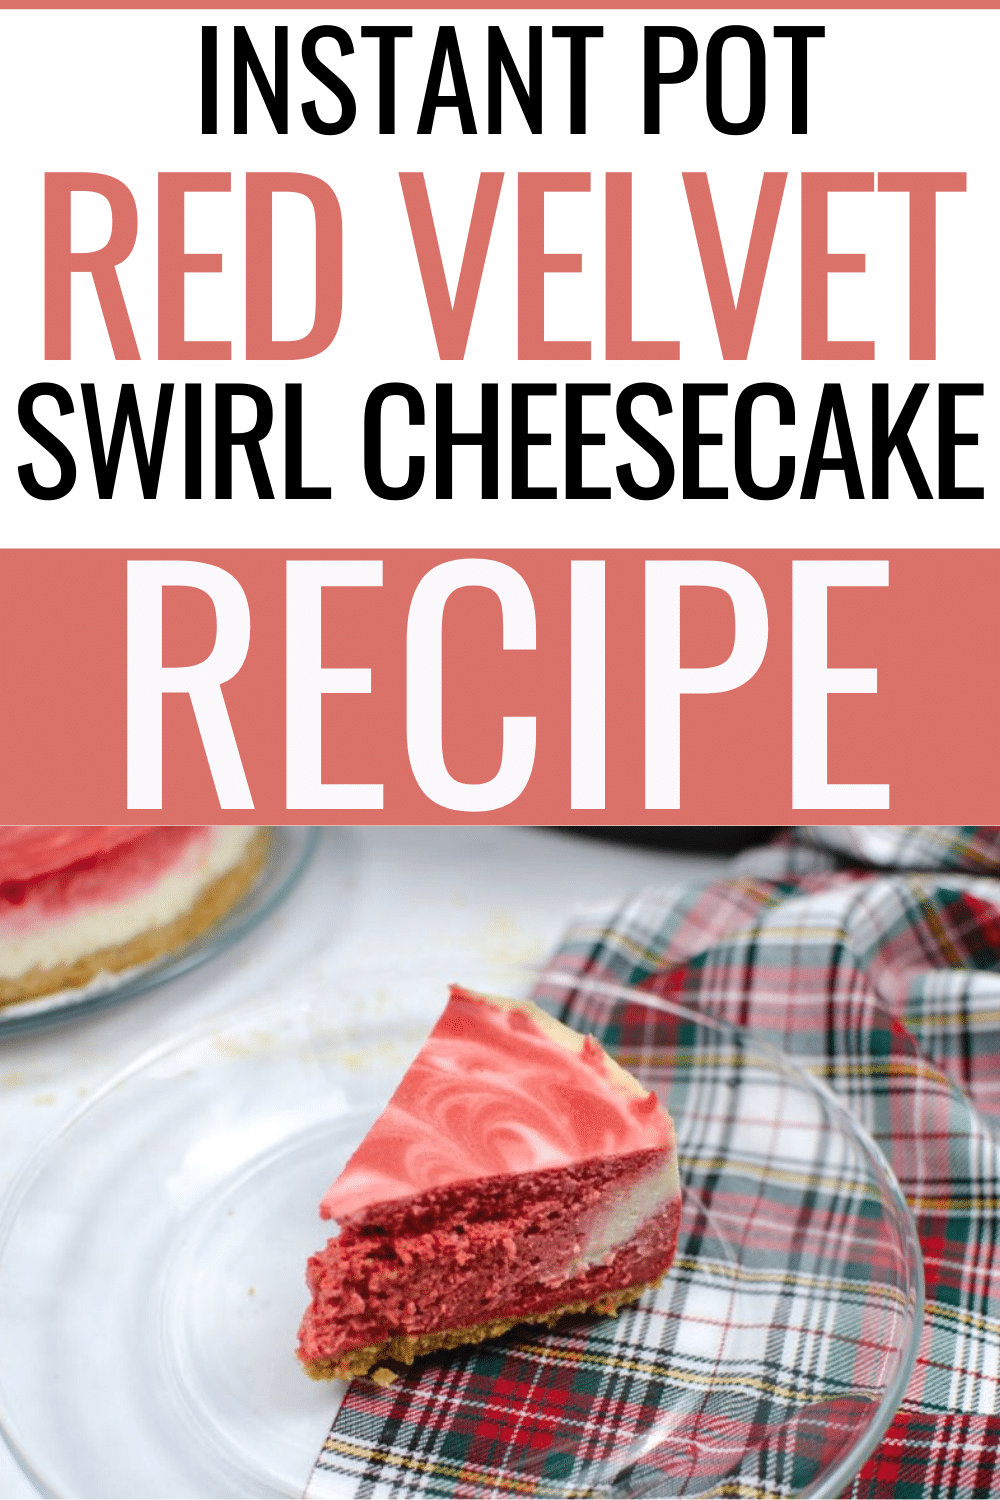 Red velvet swirl cheesecake is easy to make in an instant pot. The recipe uses a graham cracker crust & creamy red velvet topping. Delicious! #instantpot #pressurecooker #cheesecake #redvelvet via @wondermomwannab